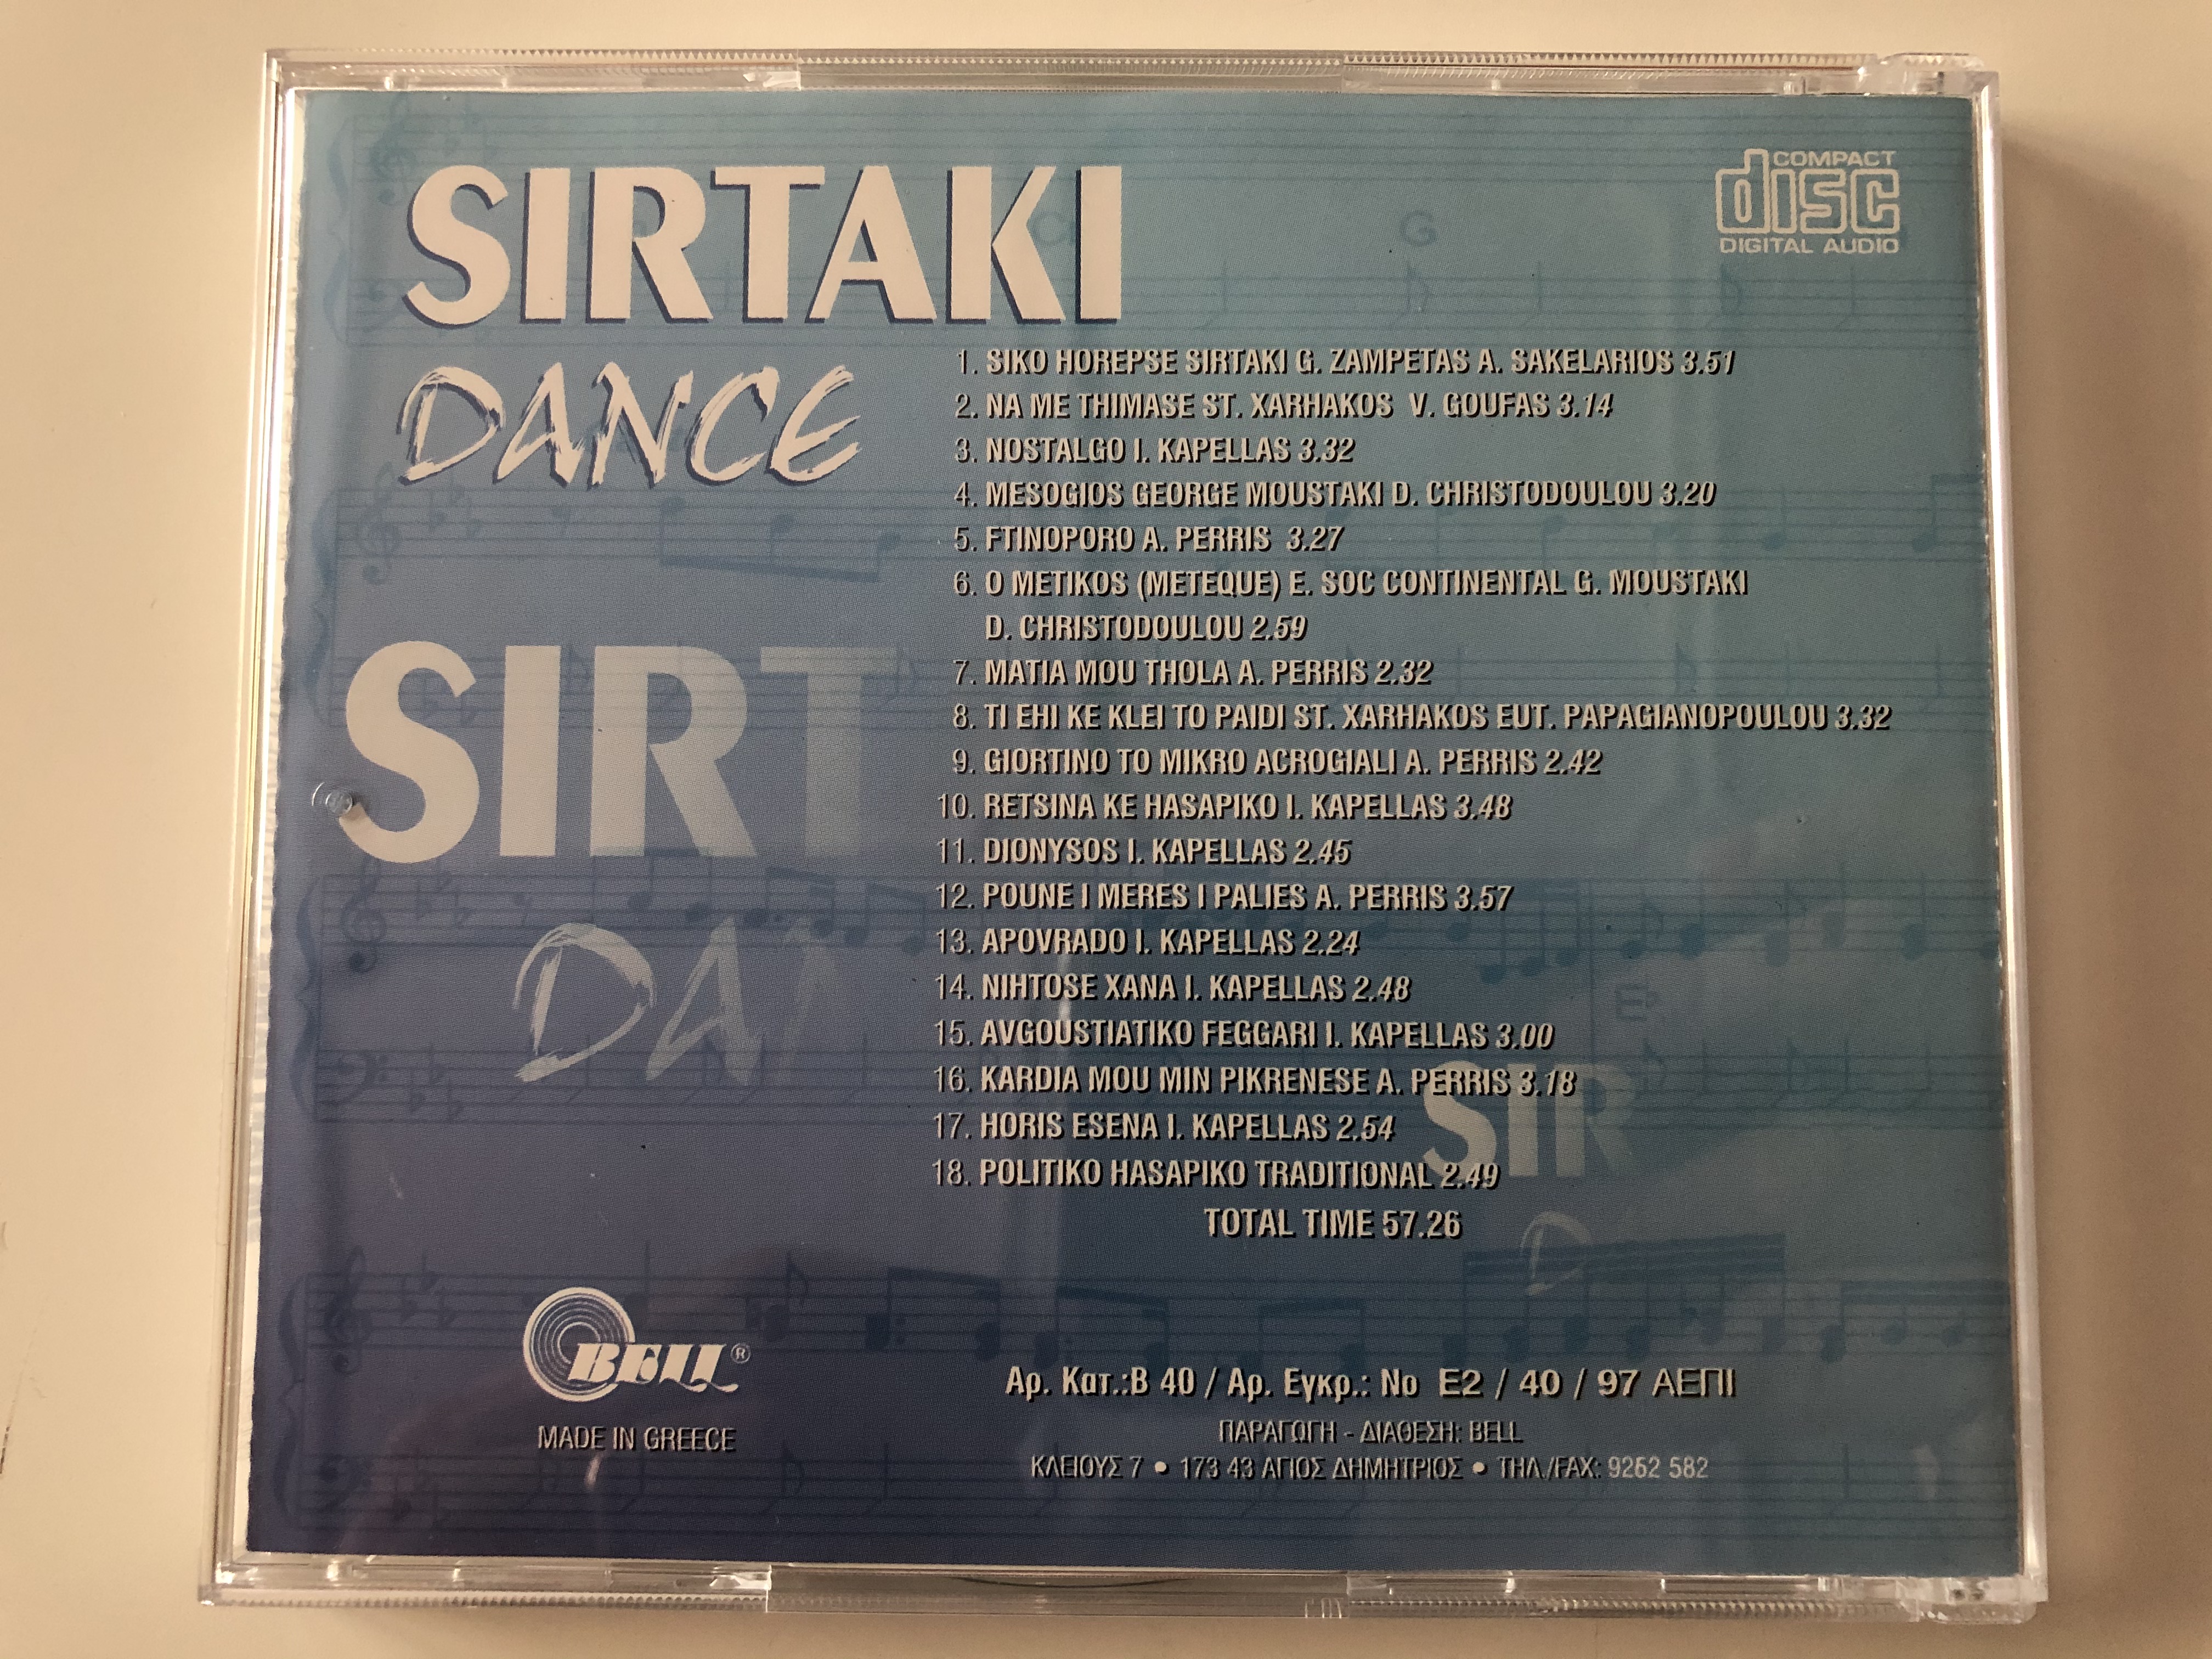 sirtaki-dance-18-instrumental-bell-audio-cd-ap.-a-24097-3-.jpg